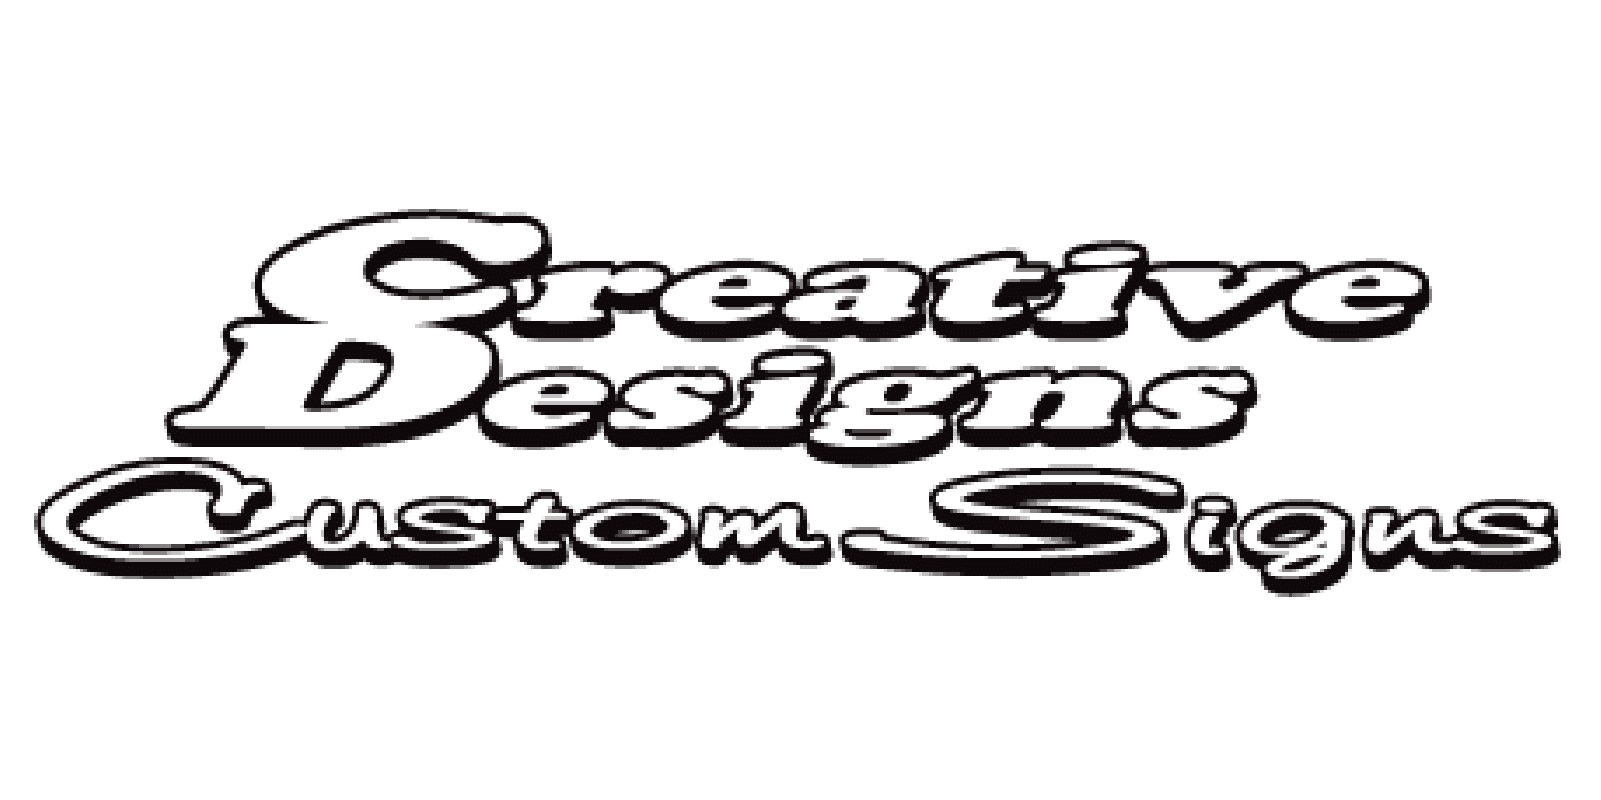 creative designs, page 1 club, the gratzi, custom signs